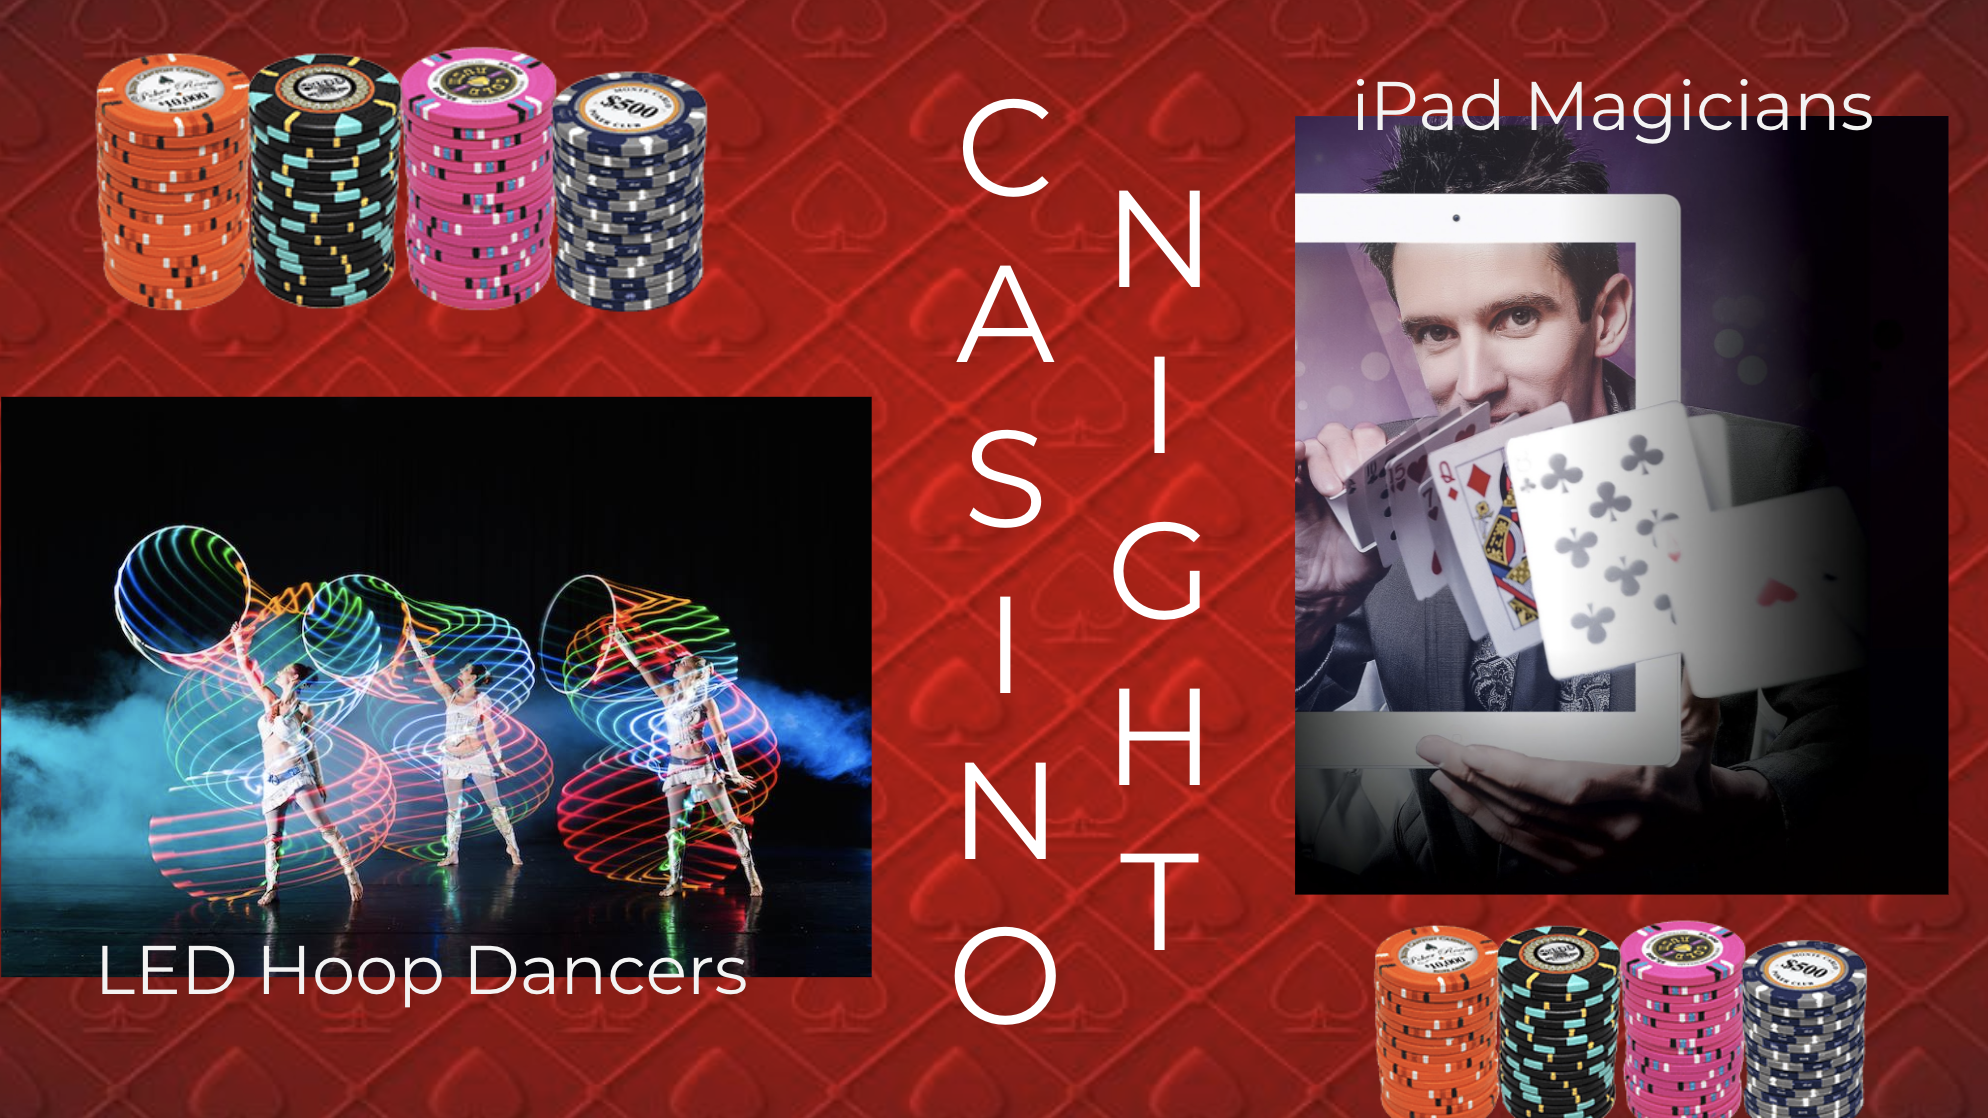 Casino night - event themes